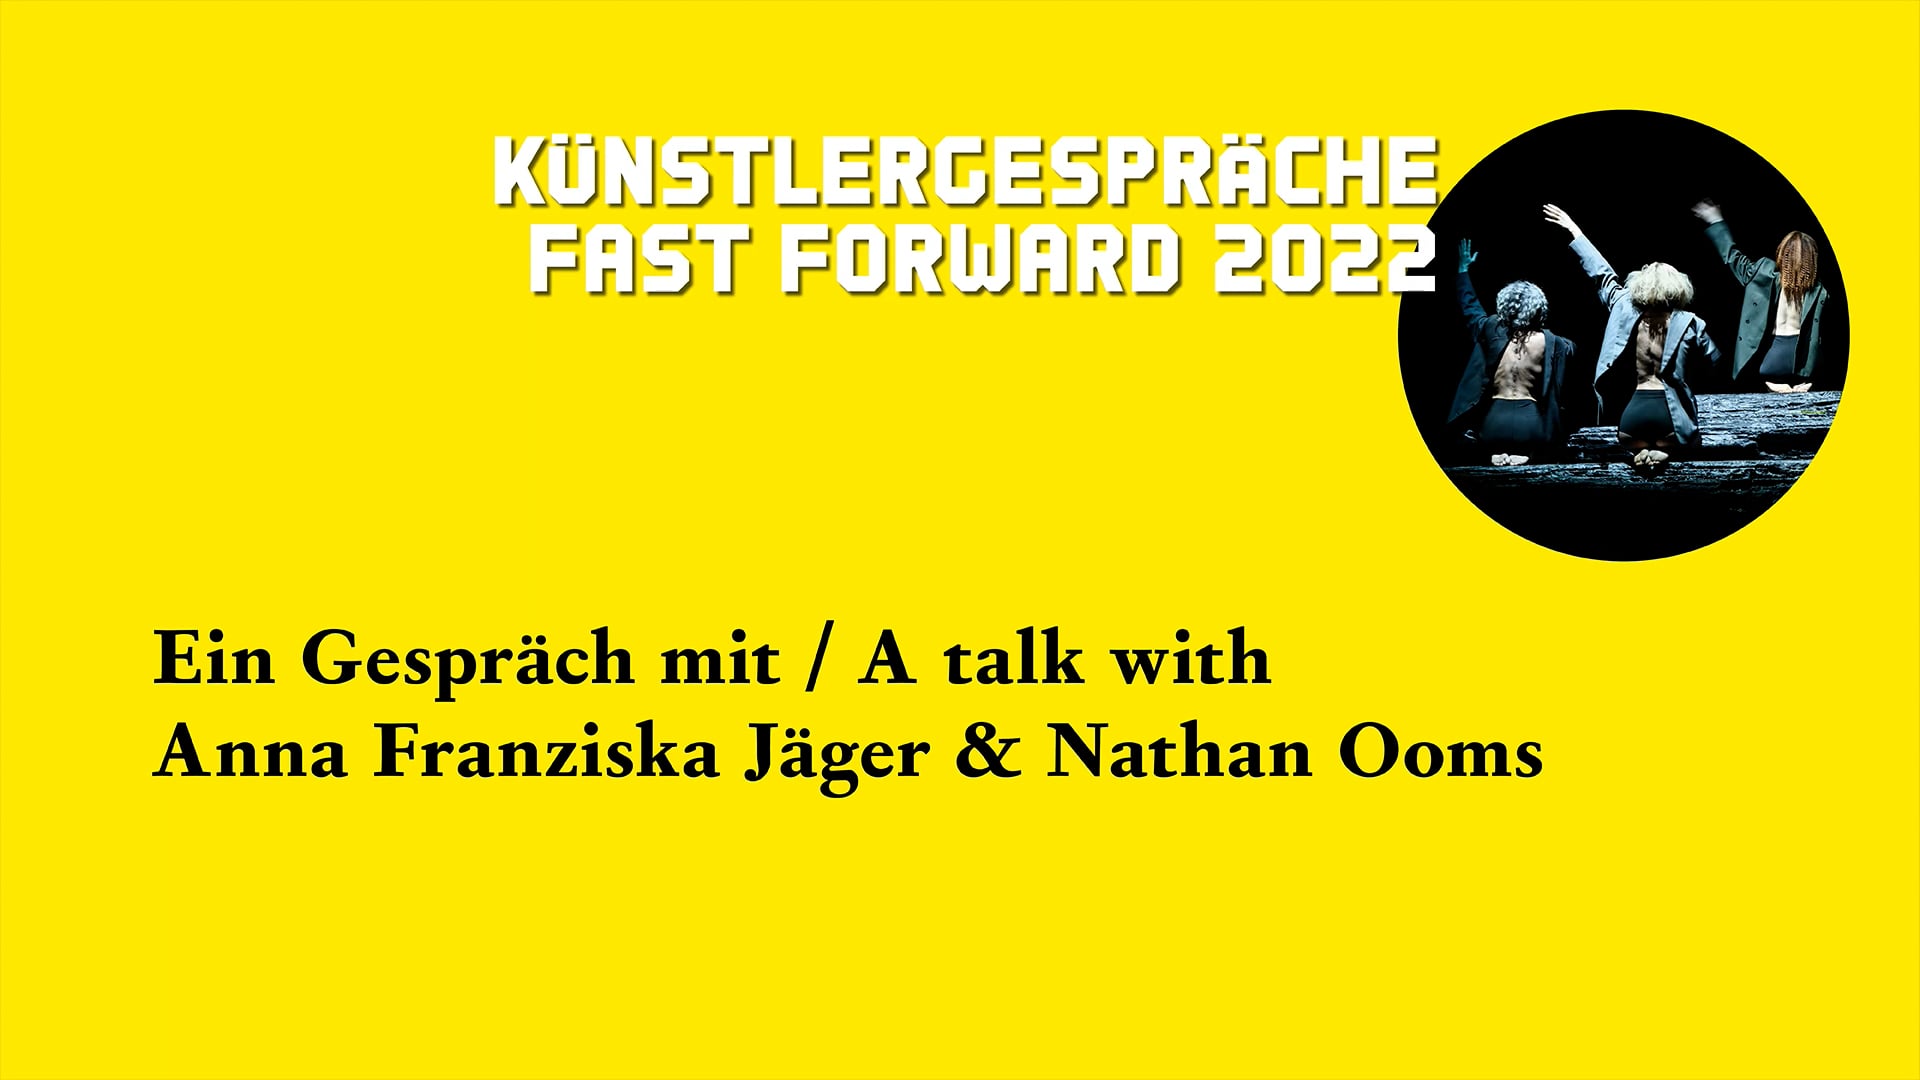 A talk with Anna Franziska Jäger & Nathan Ooms